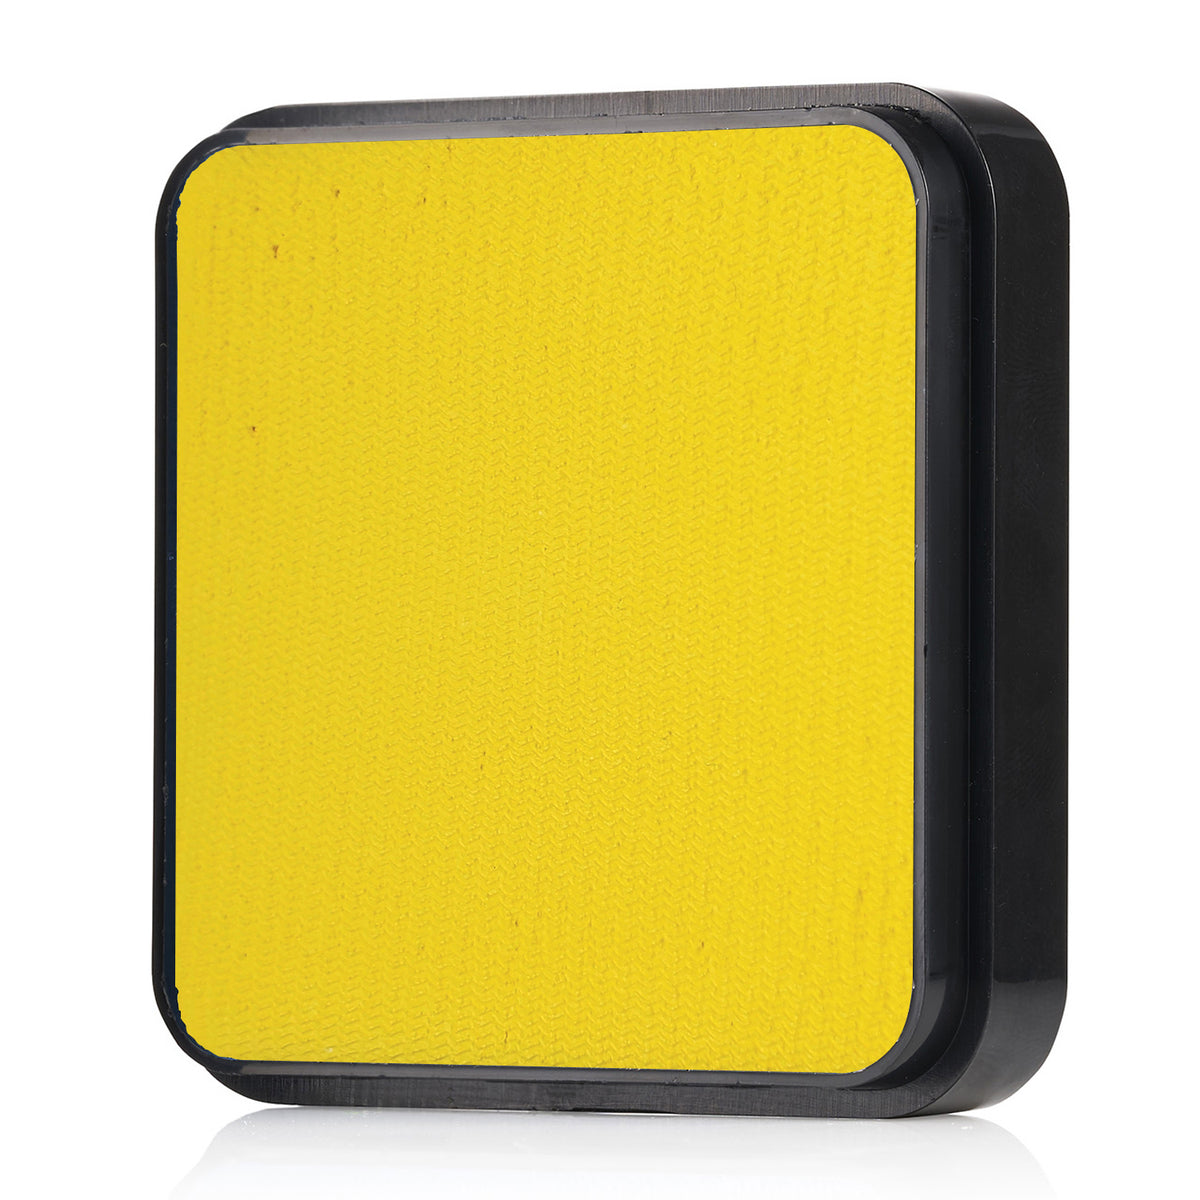 Kraze Square - Light Yellow (25 gm)